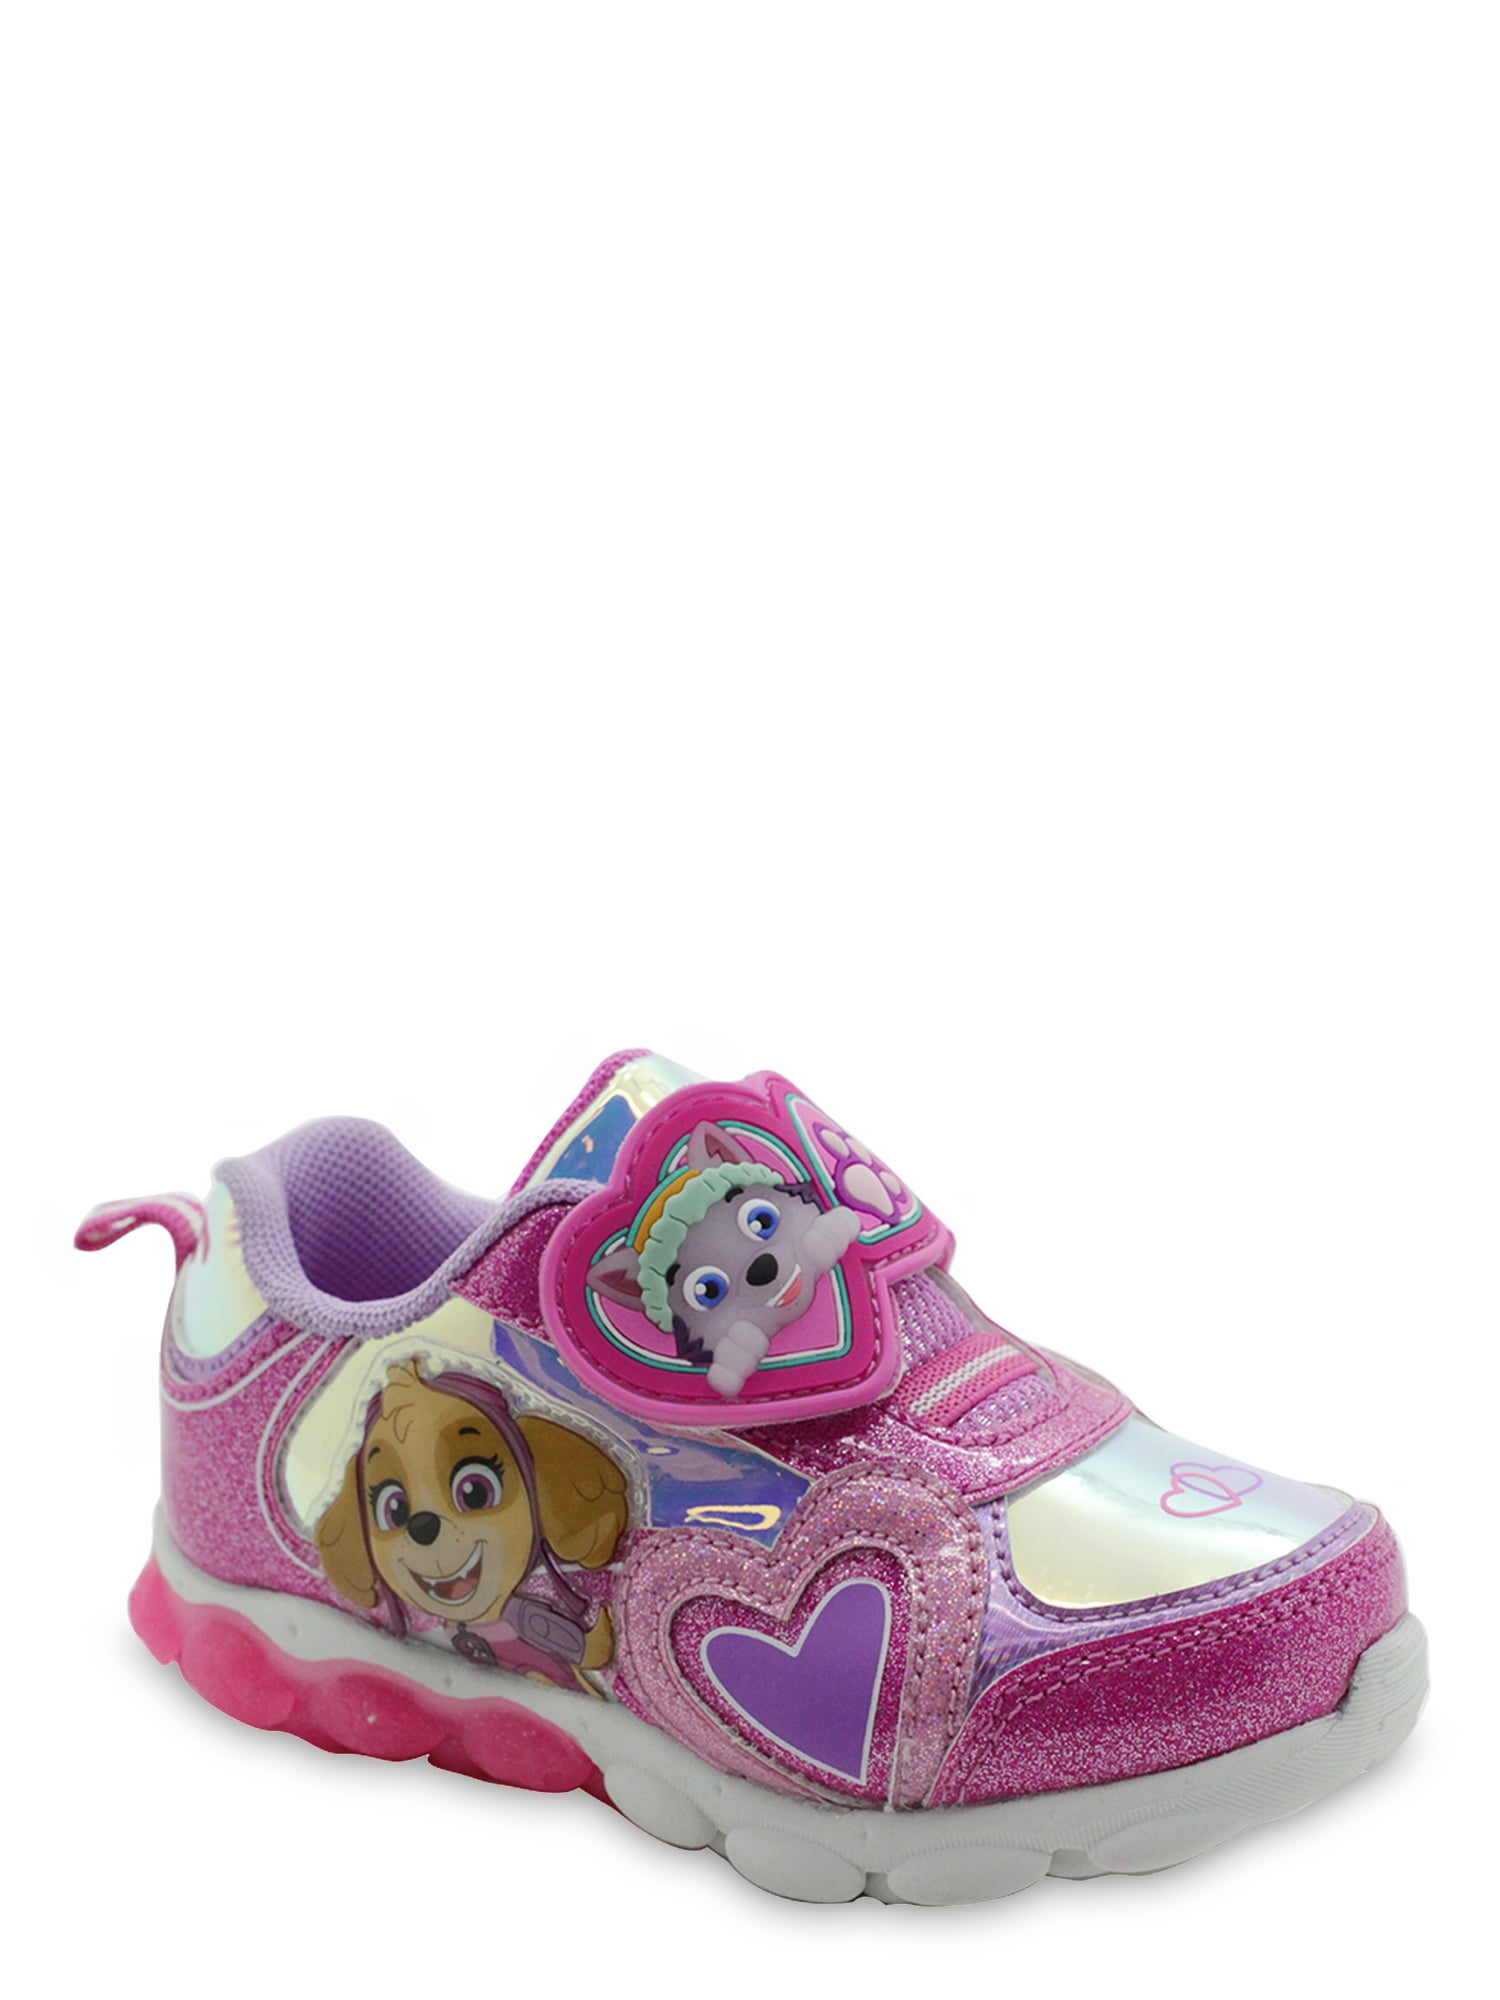 Paw Patrol Sneakers Size 6 7 8 9 10 or 11 Lightweight Toddler Girls Nickelodeon 